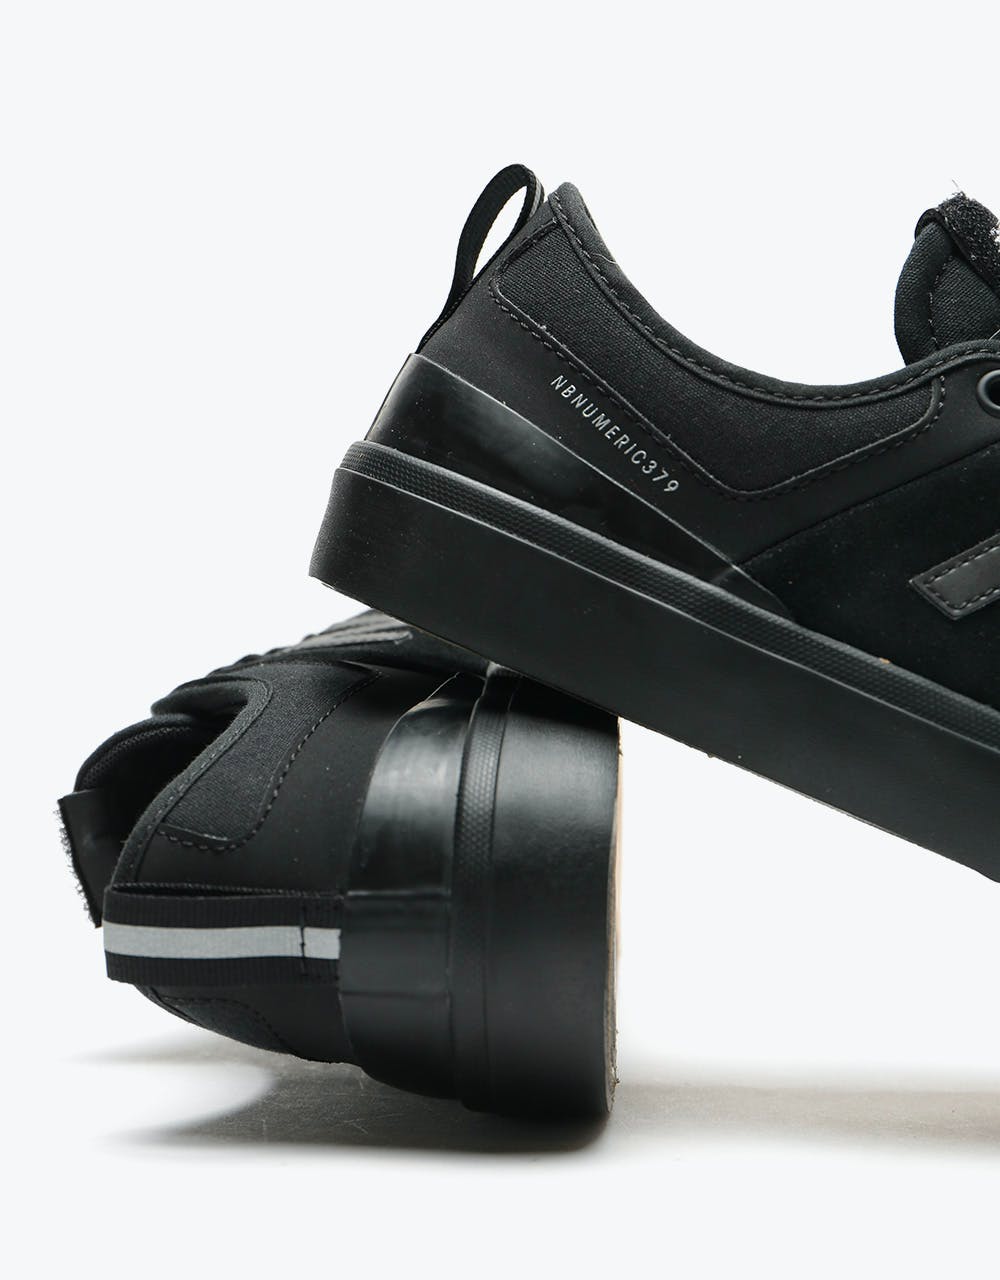 New Balance Numeric x Rufus 379 Skate Shoes - Black Reflective